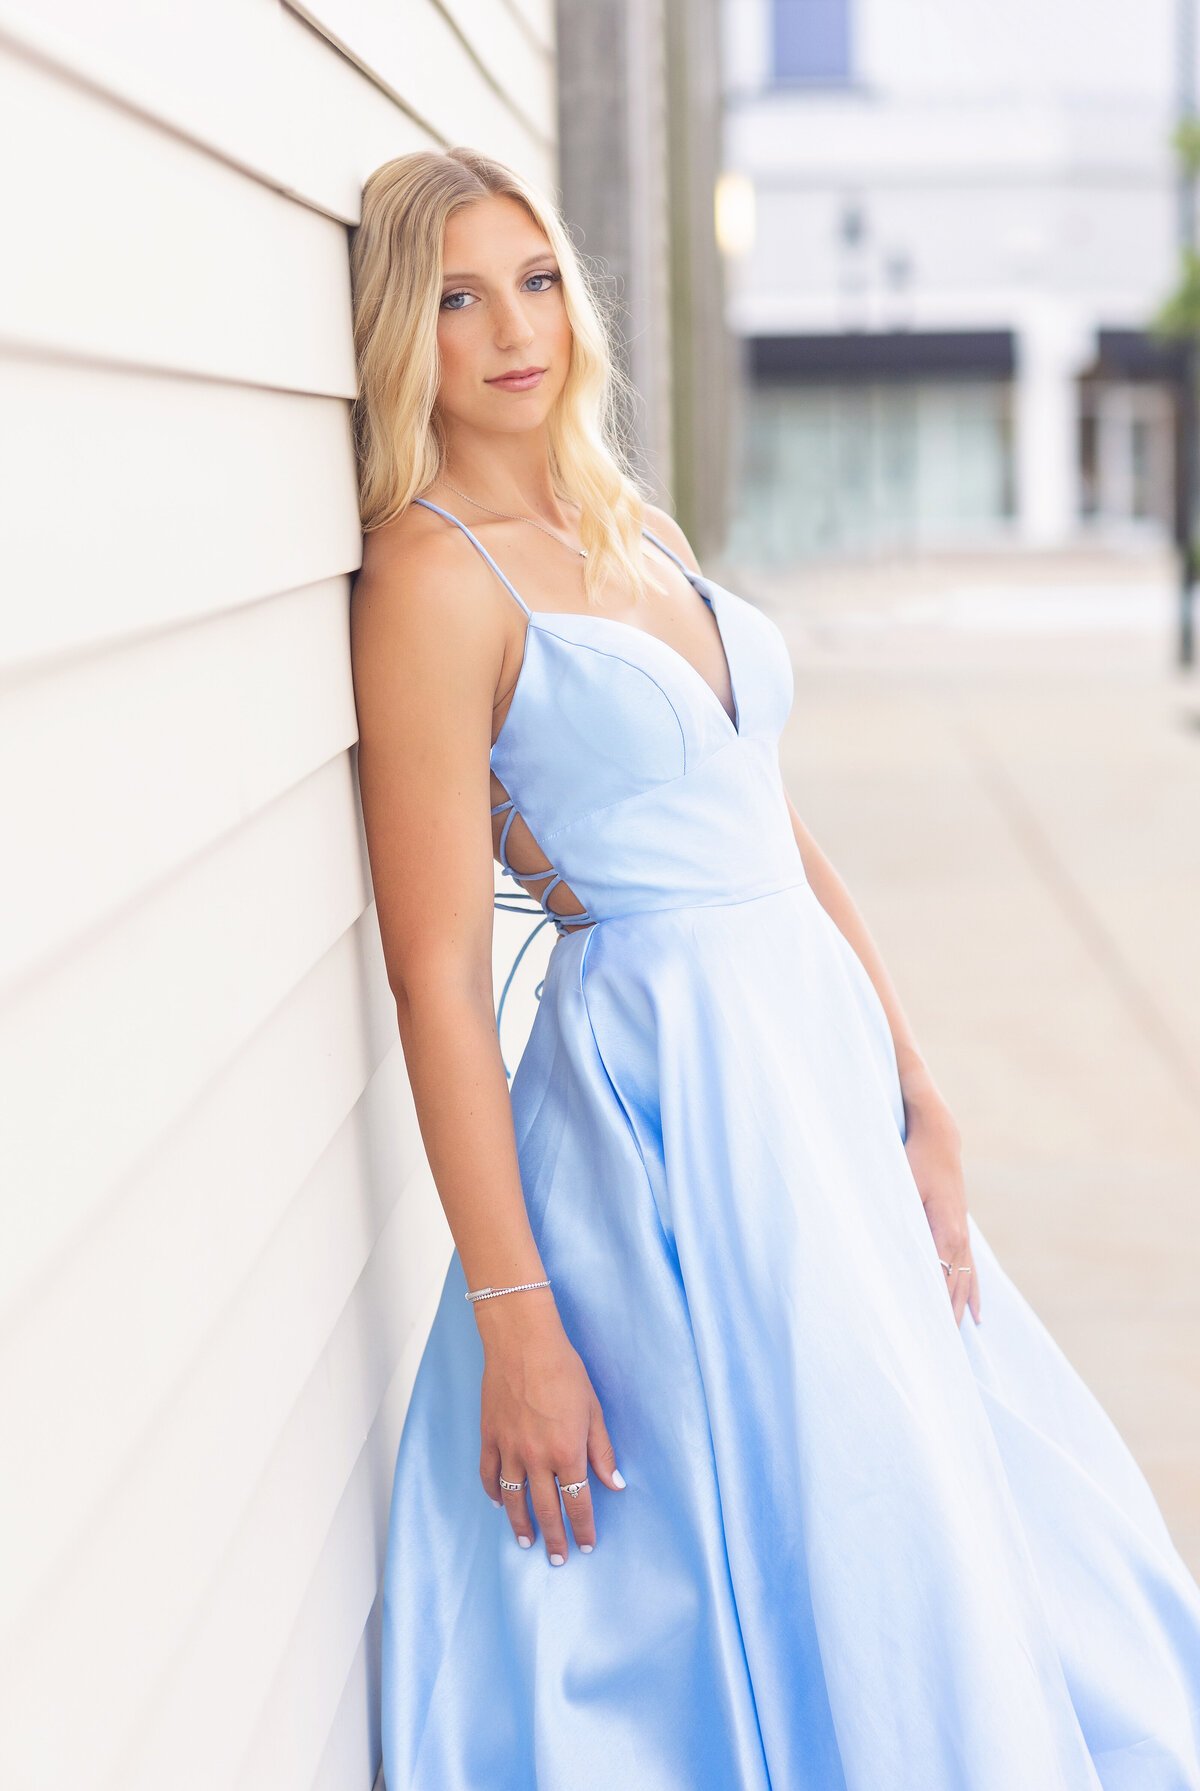 high school senior girl prom portrait outdoors - Kristen Zannella Photography